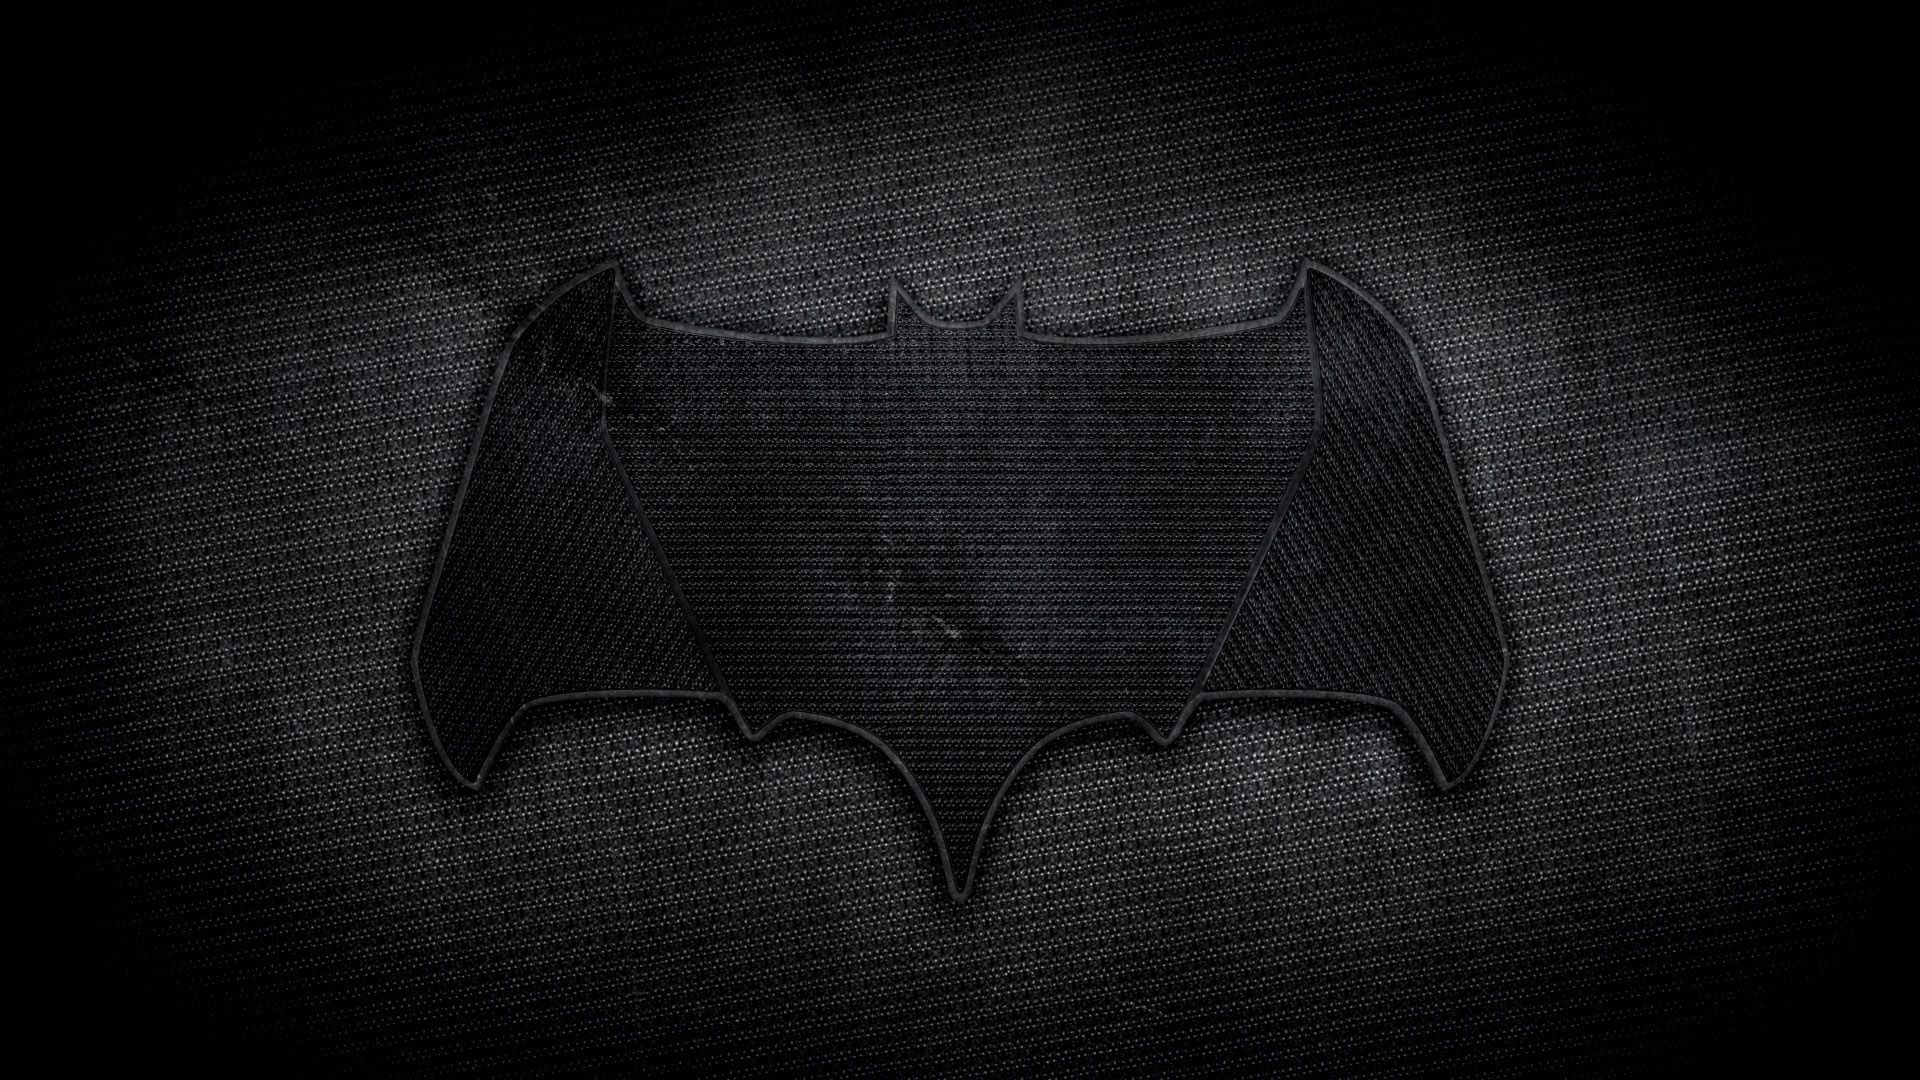 Batman logo wallpaper for desktop 1080p 132